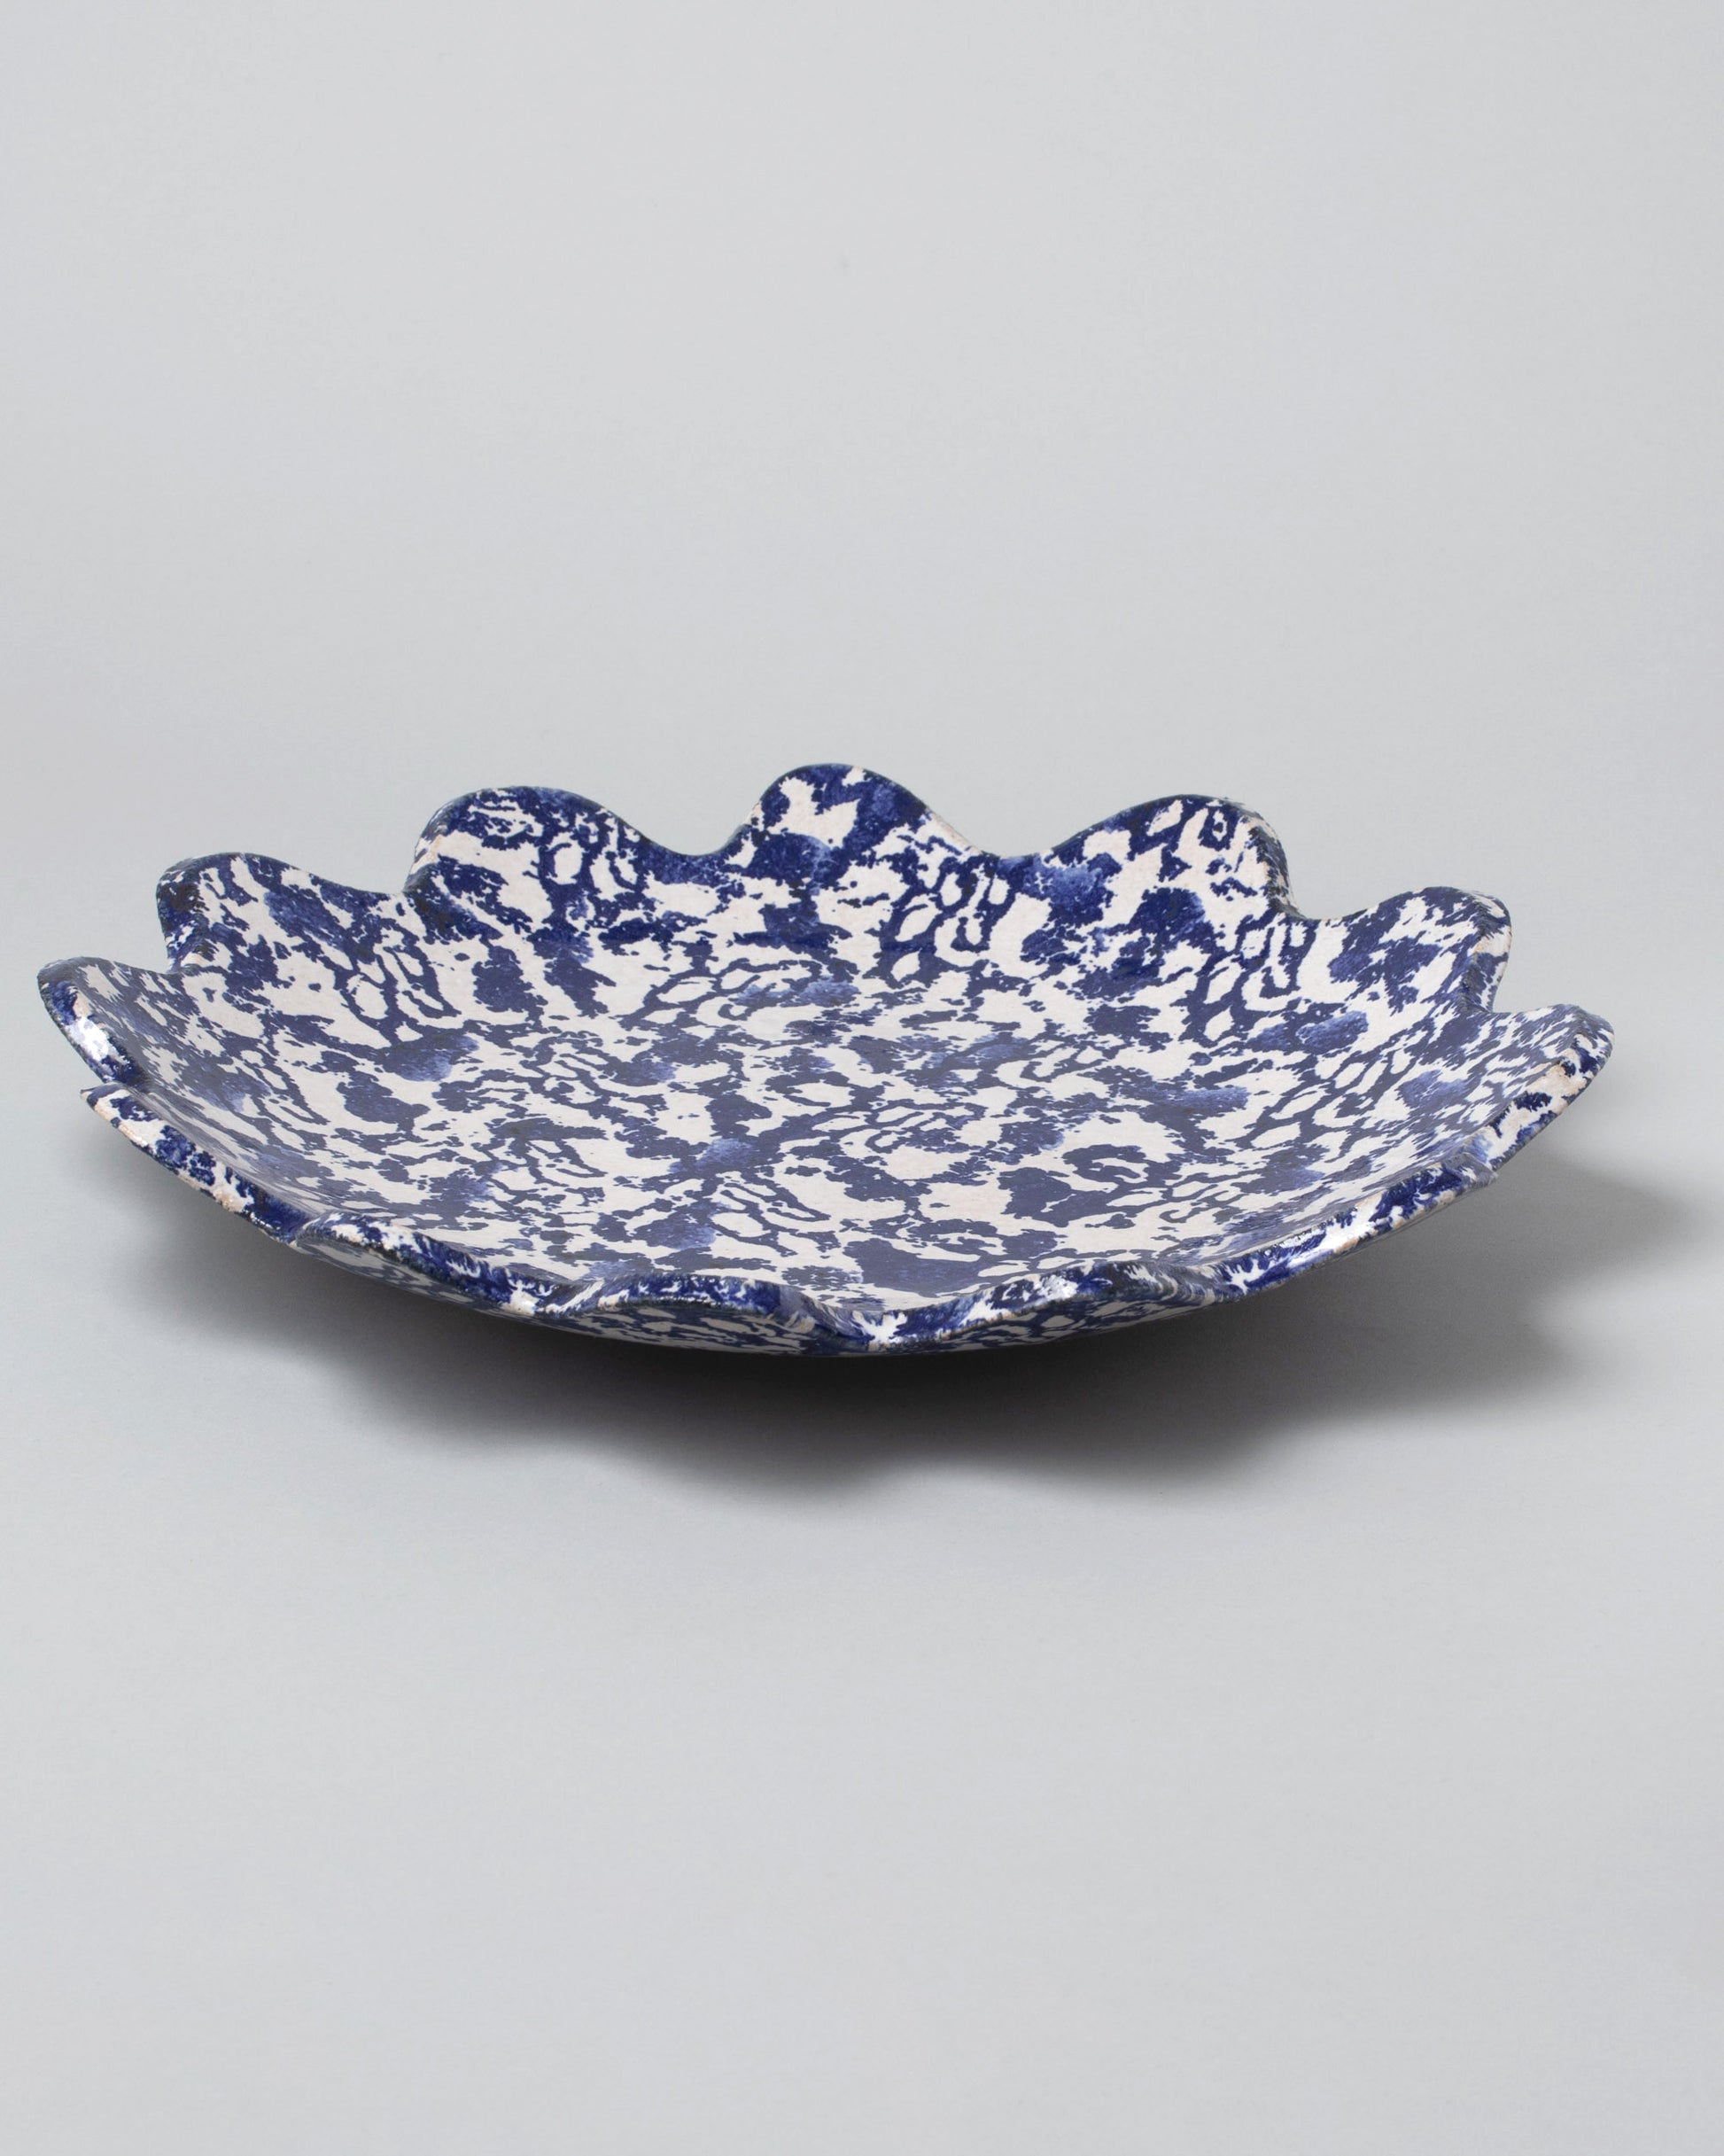 Morgan Peck Blue & White Scallop Platter on light color background.